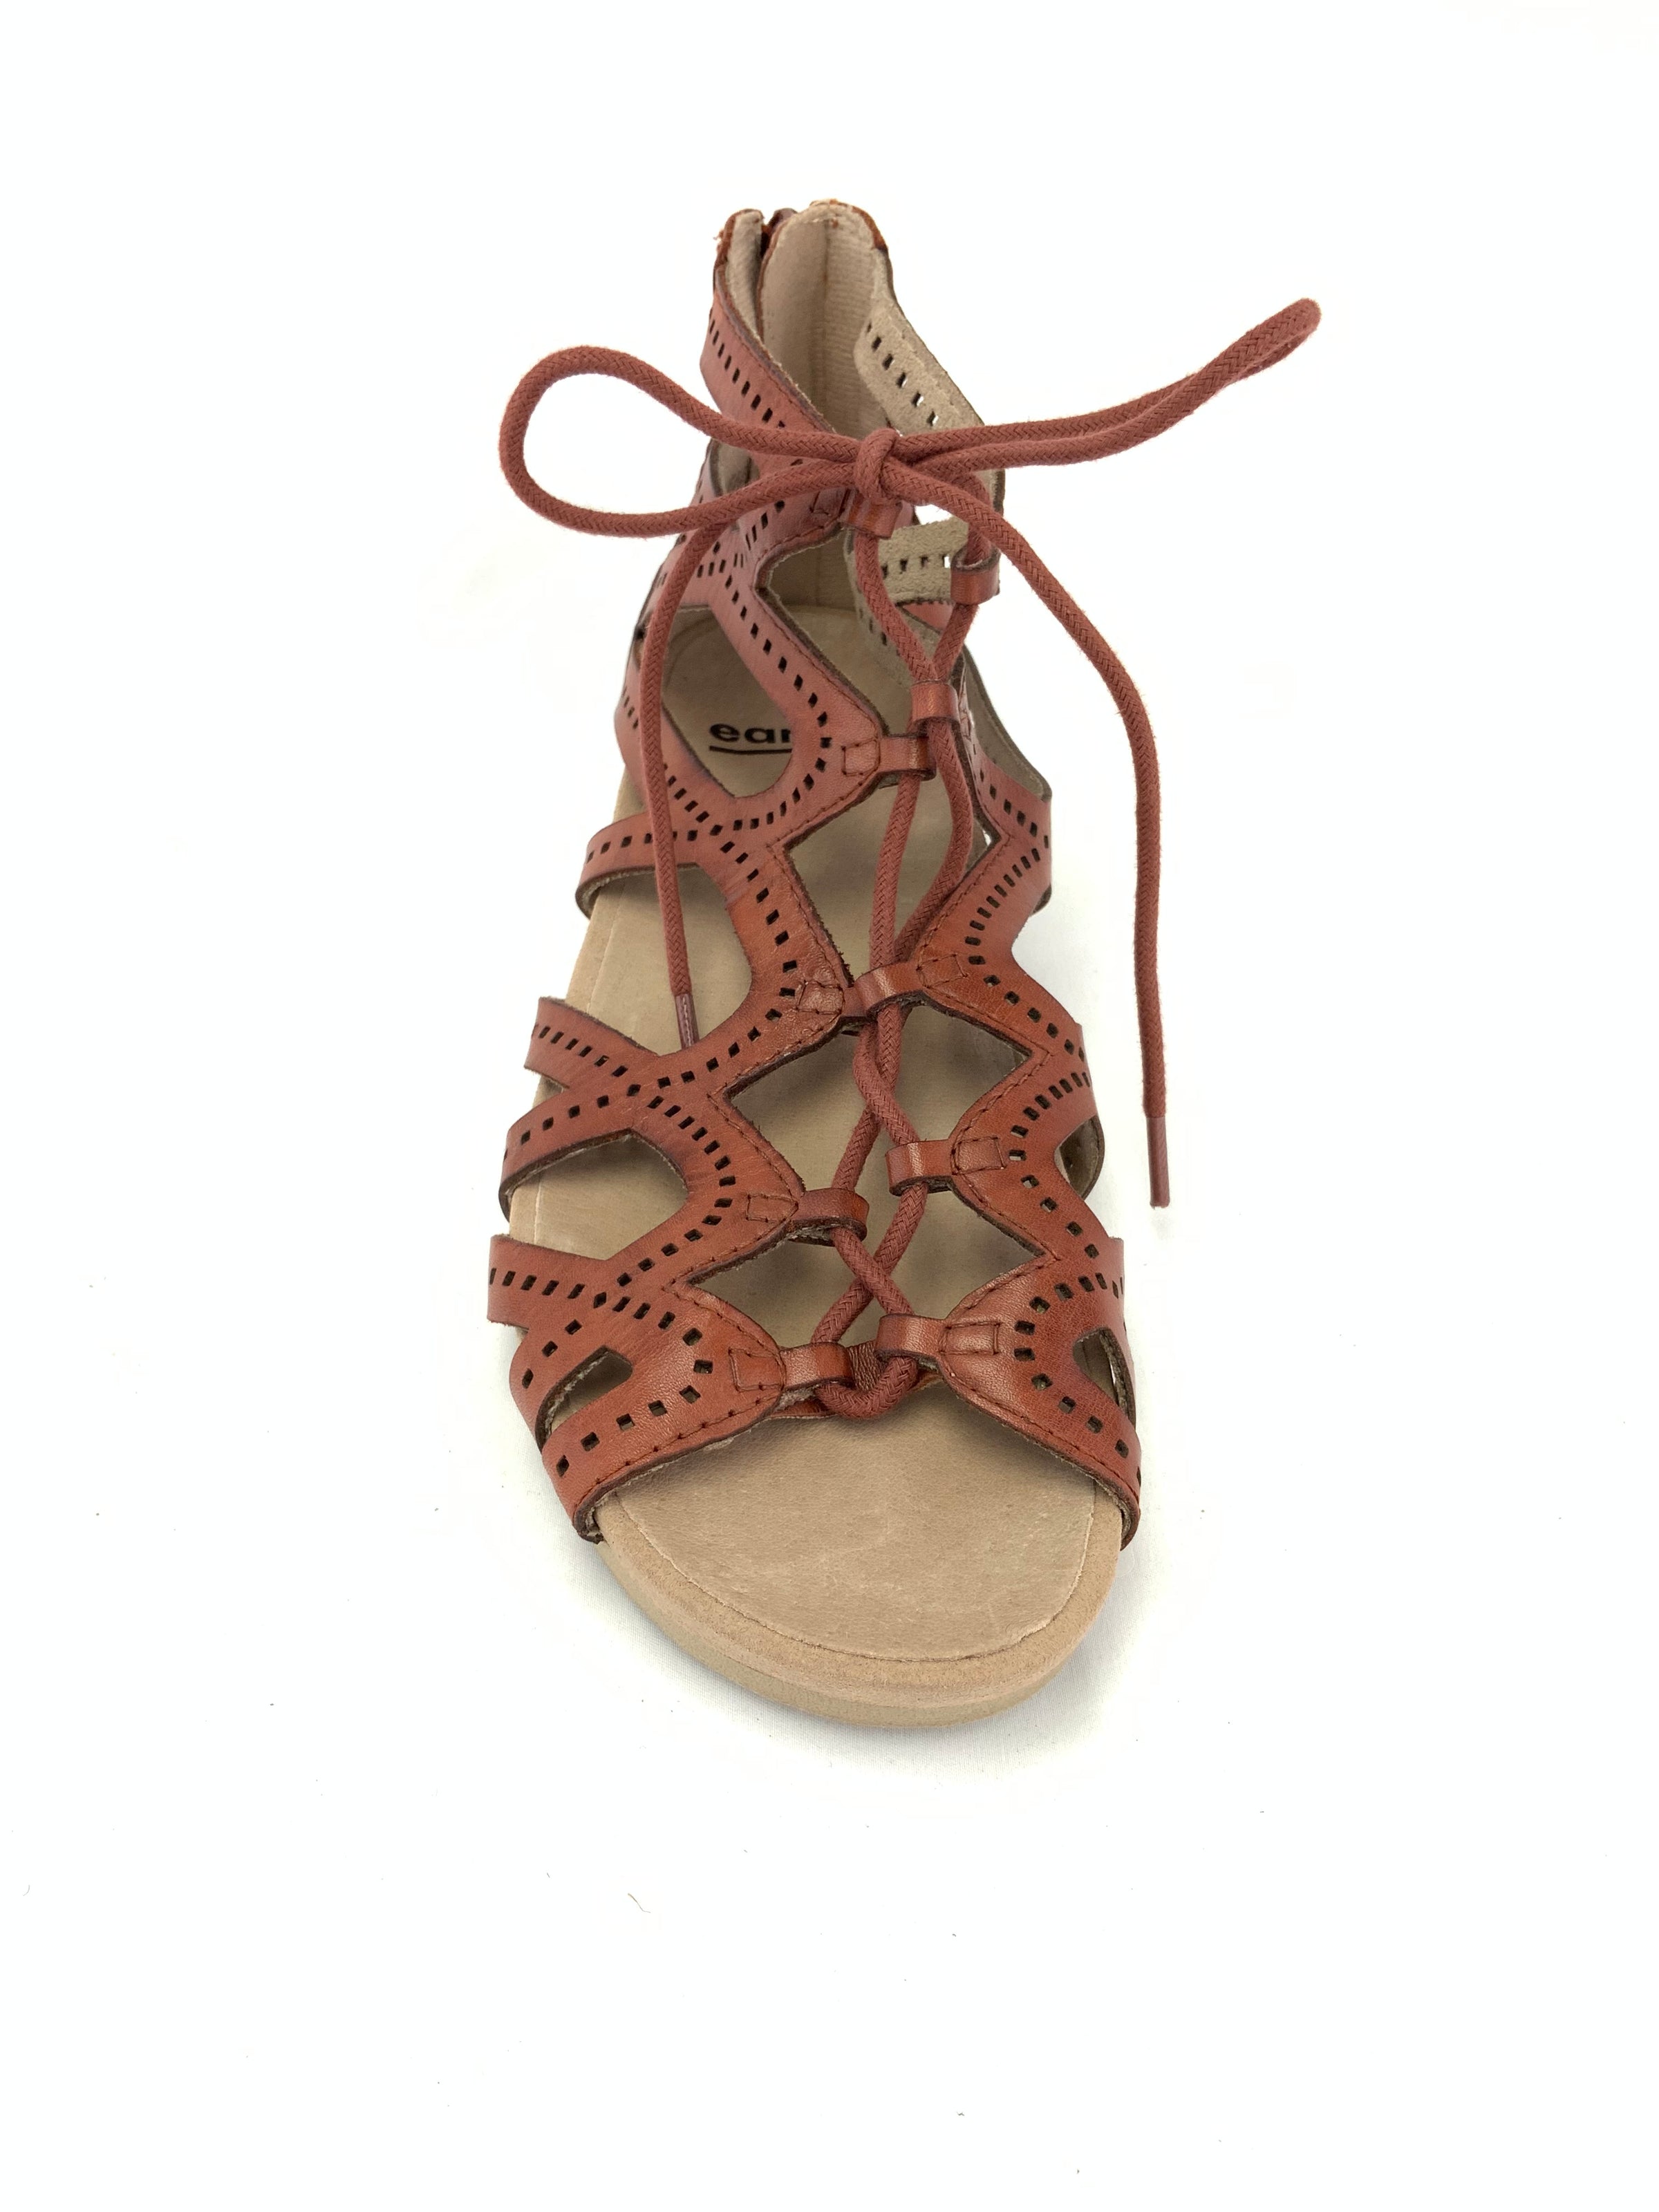 Earth Linden Lehi Sandals Size 8M